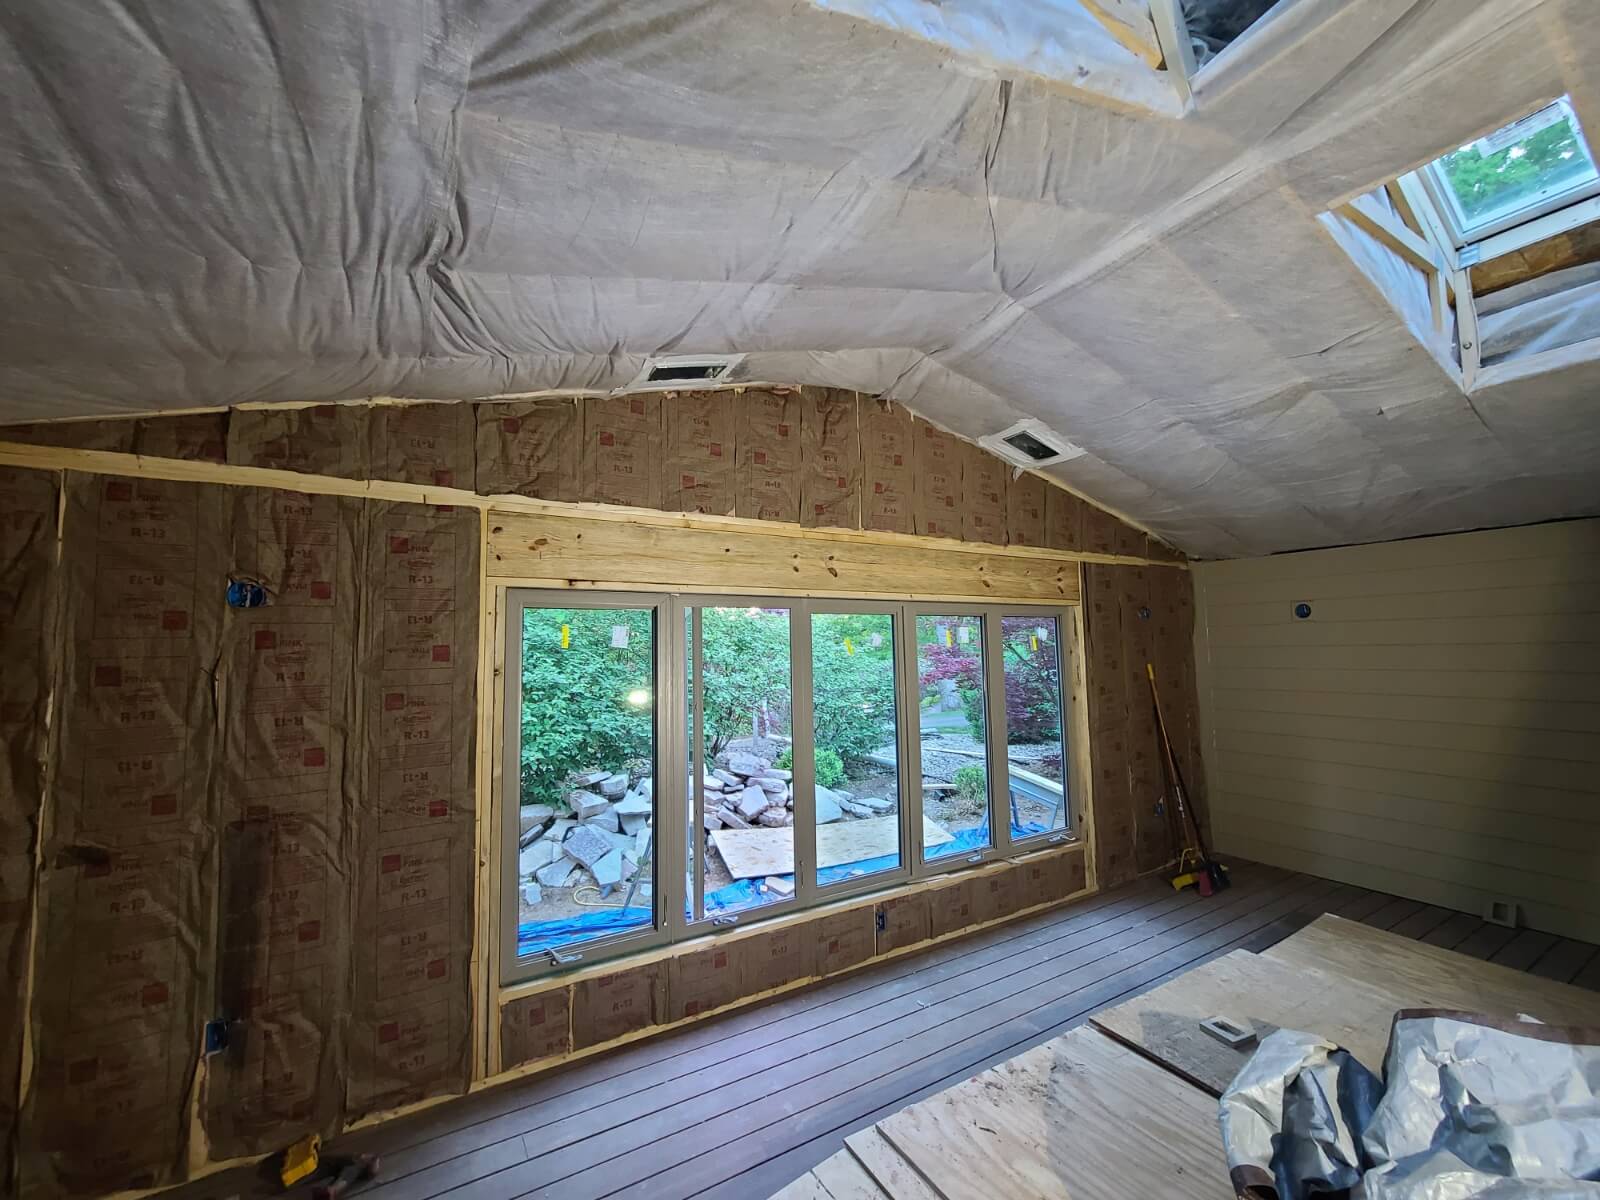 Saint Charles attic insulation company